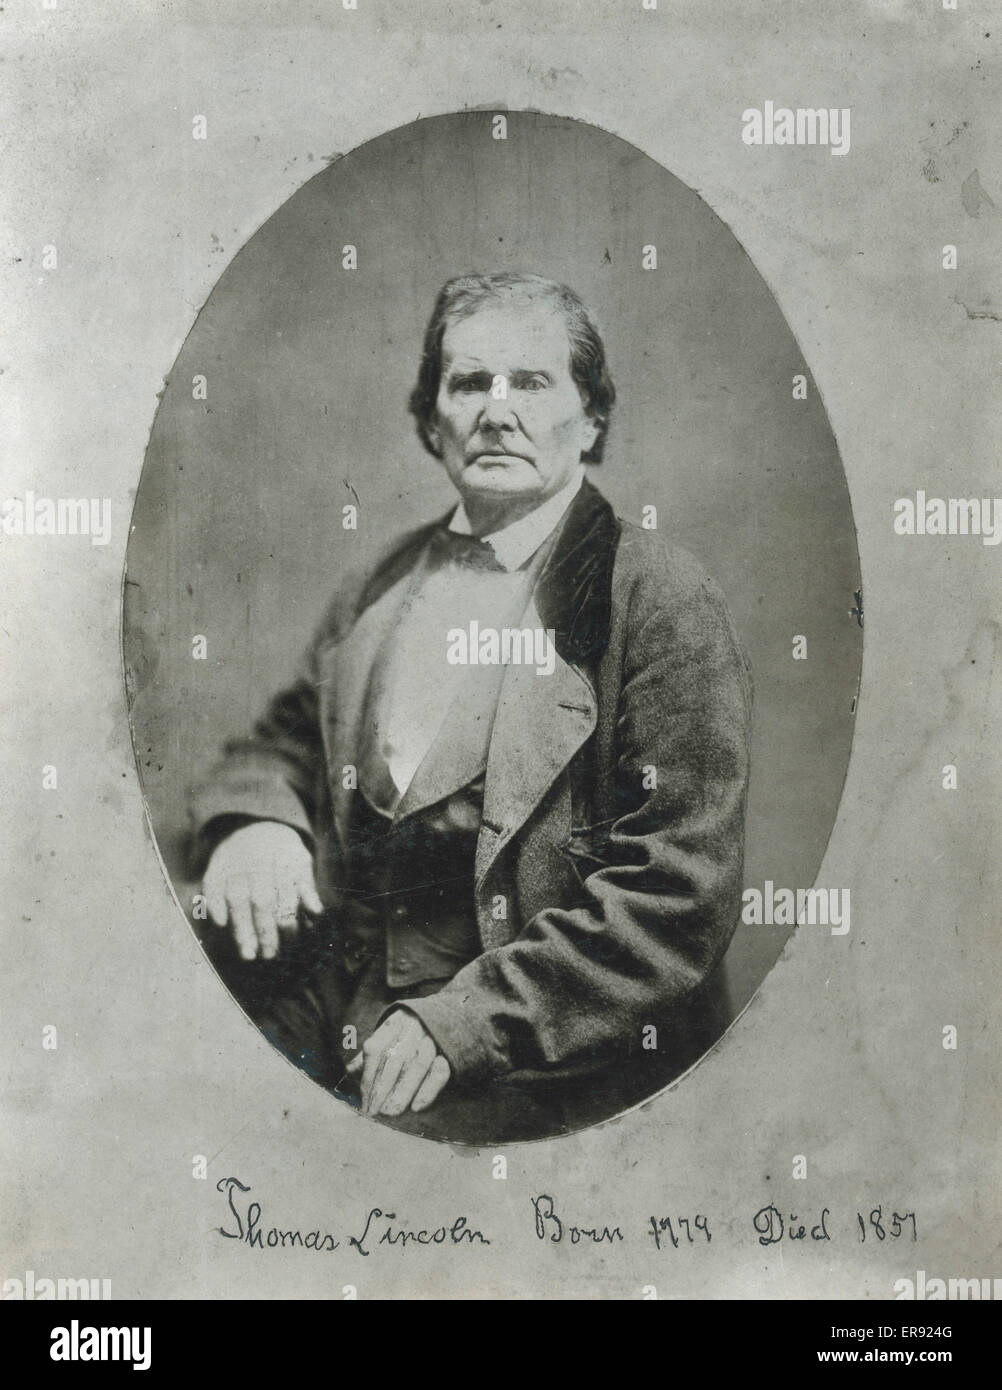 Thomas Lincoln, nacido en 1779, murió en 1851 Foto de stock